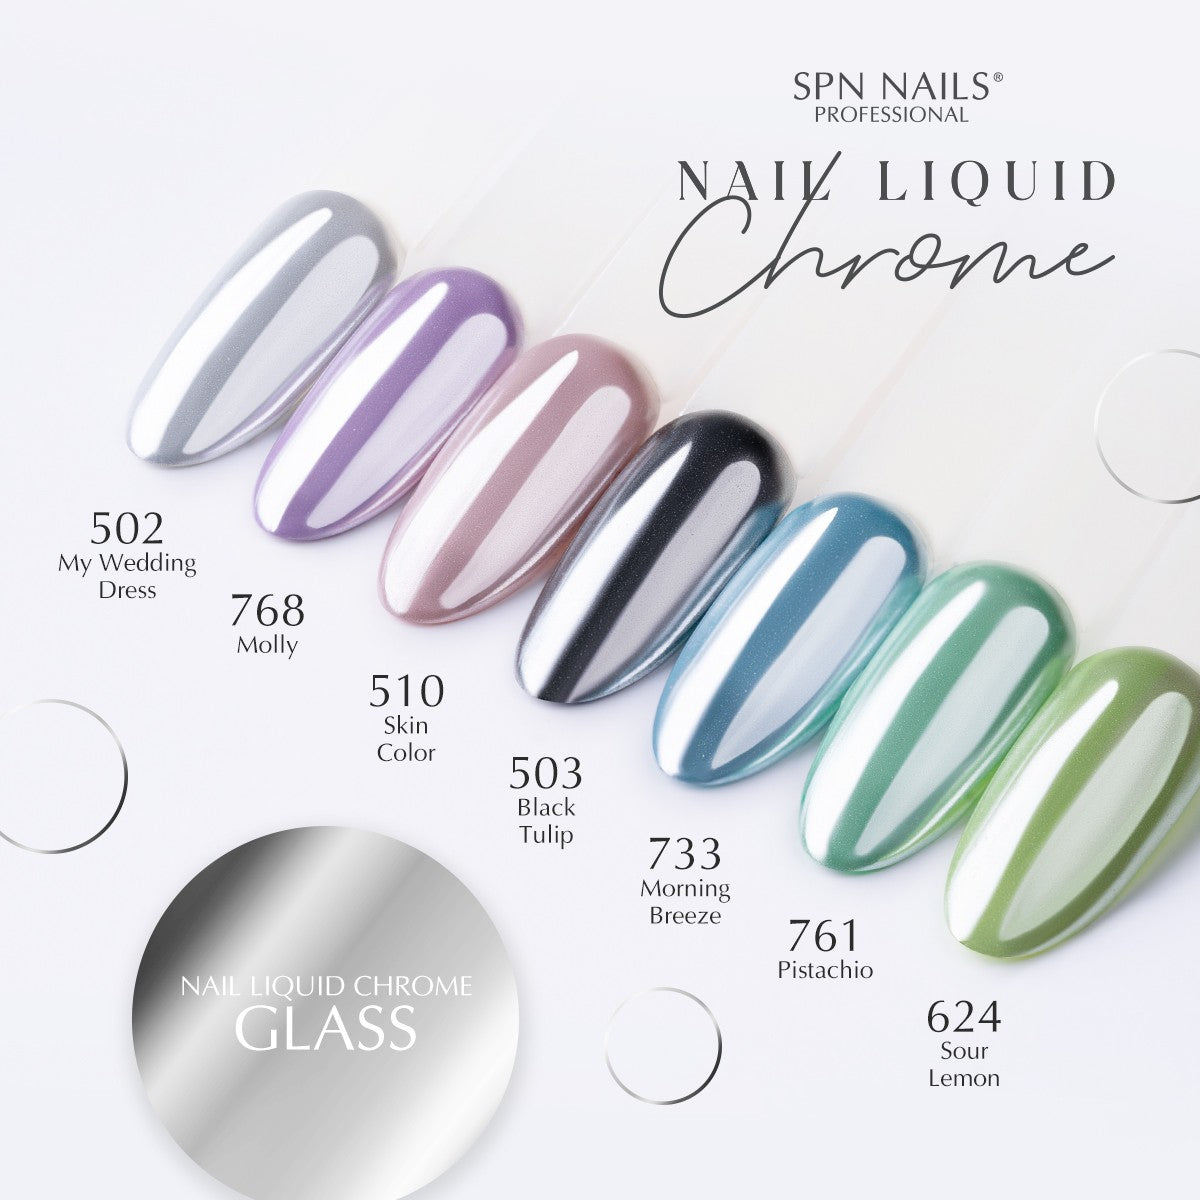 SPN Nails Nail Liquid Chrome Glass Nail Dust Swatch